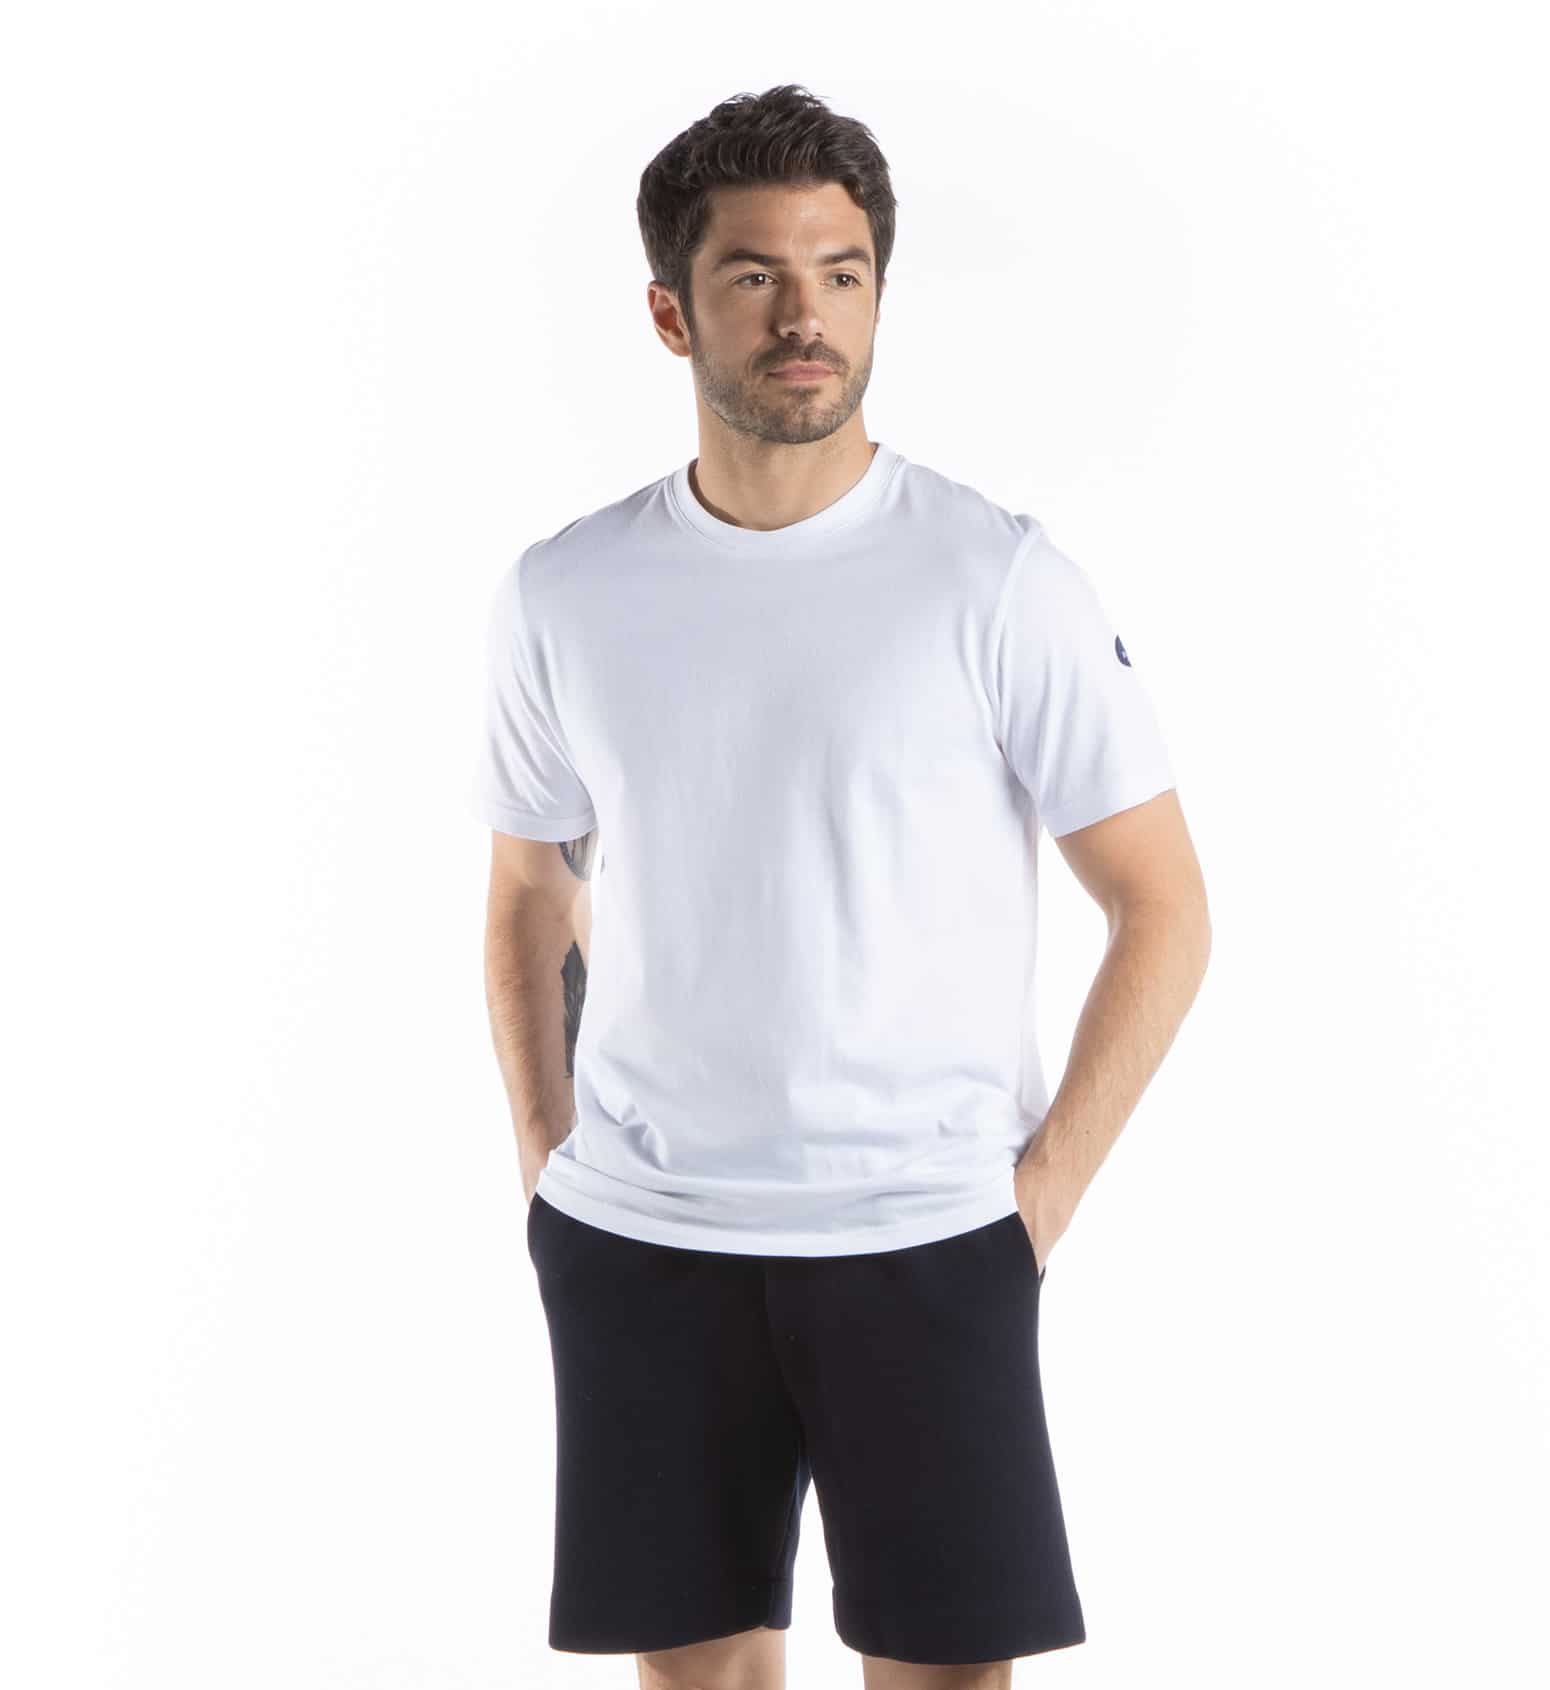 Short-sleeved round-neck T-shirt in organic cotton